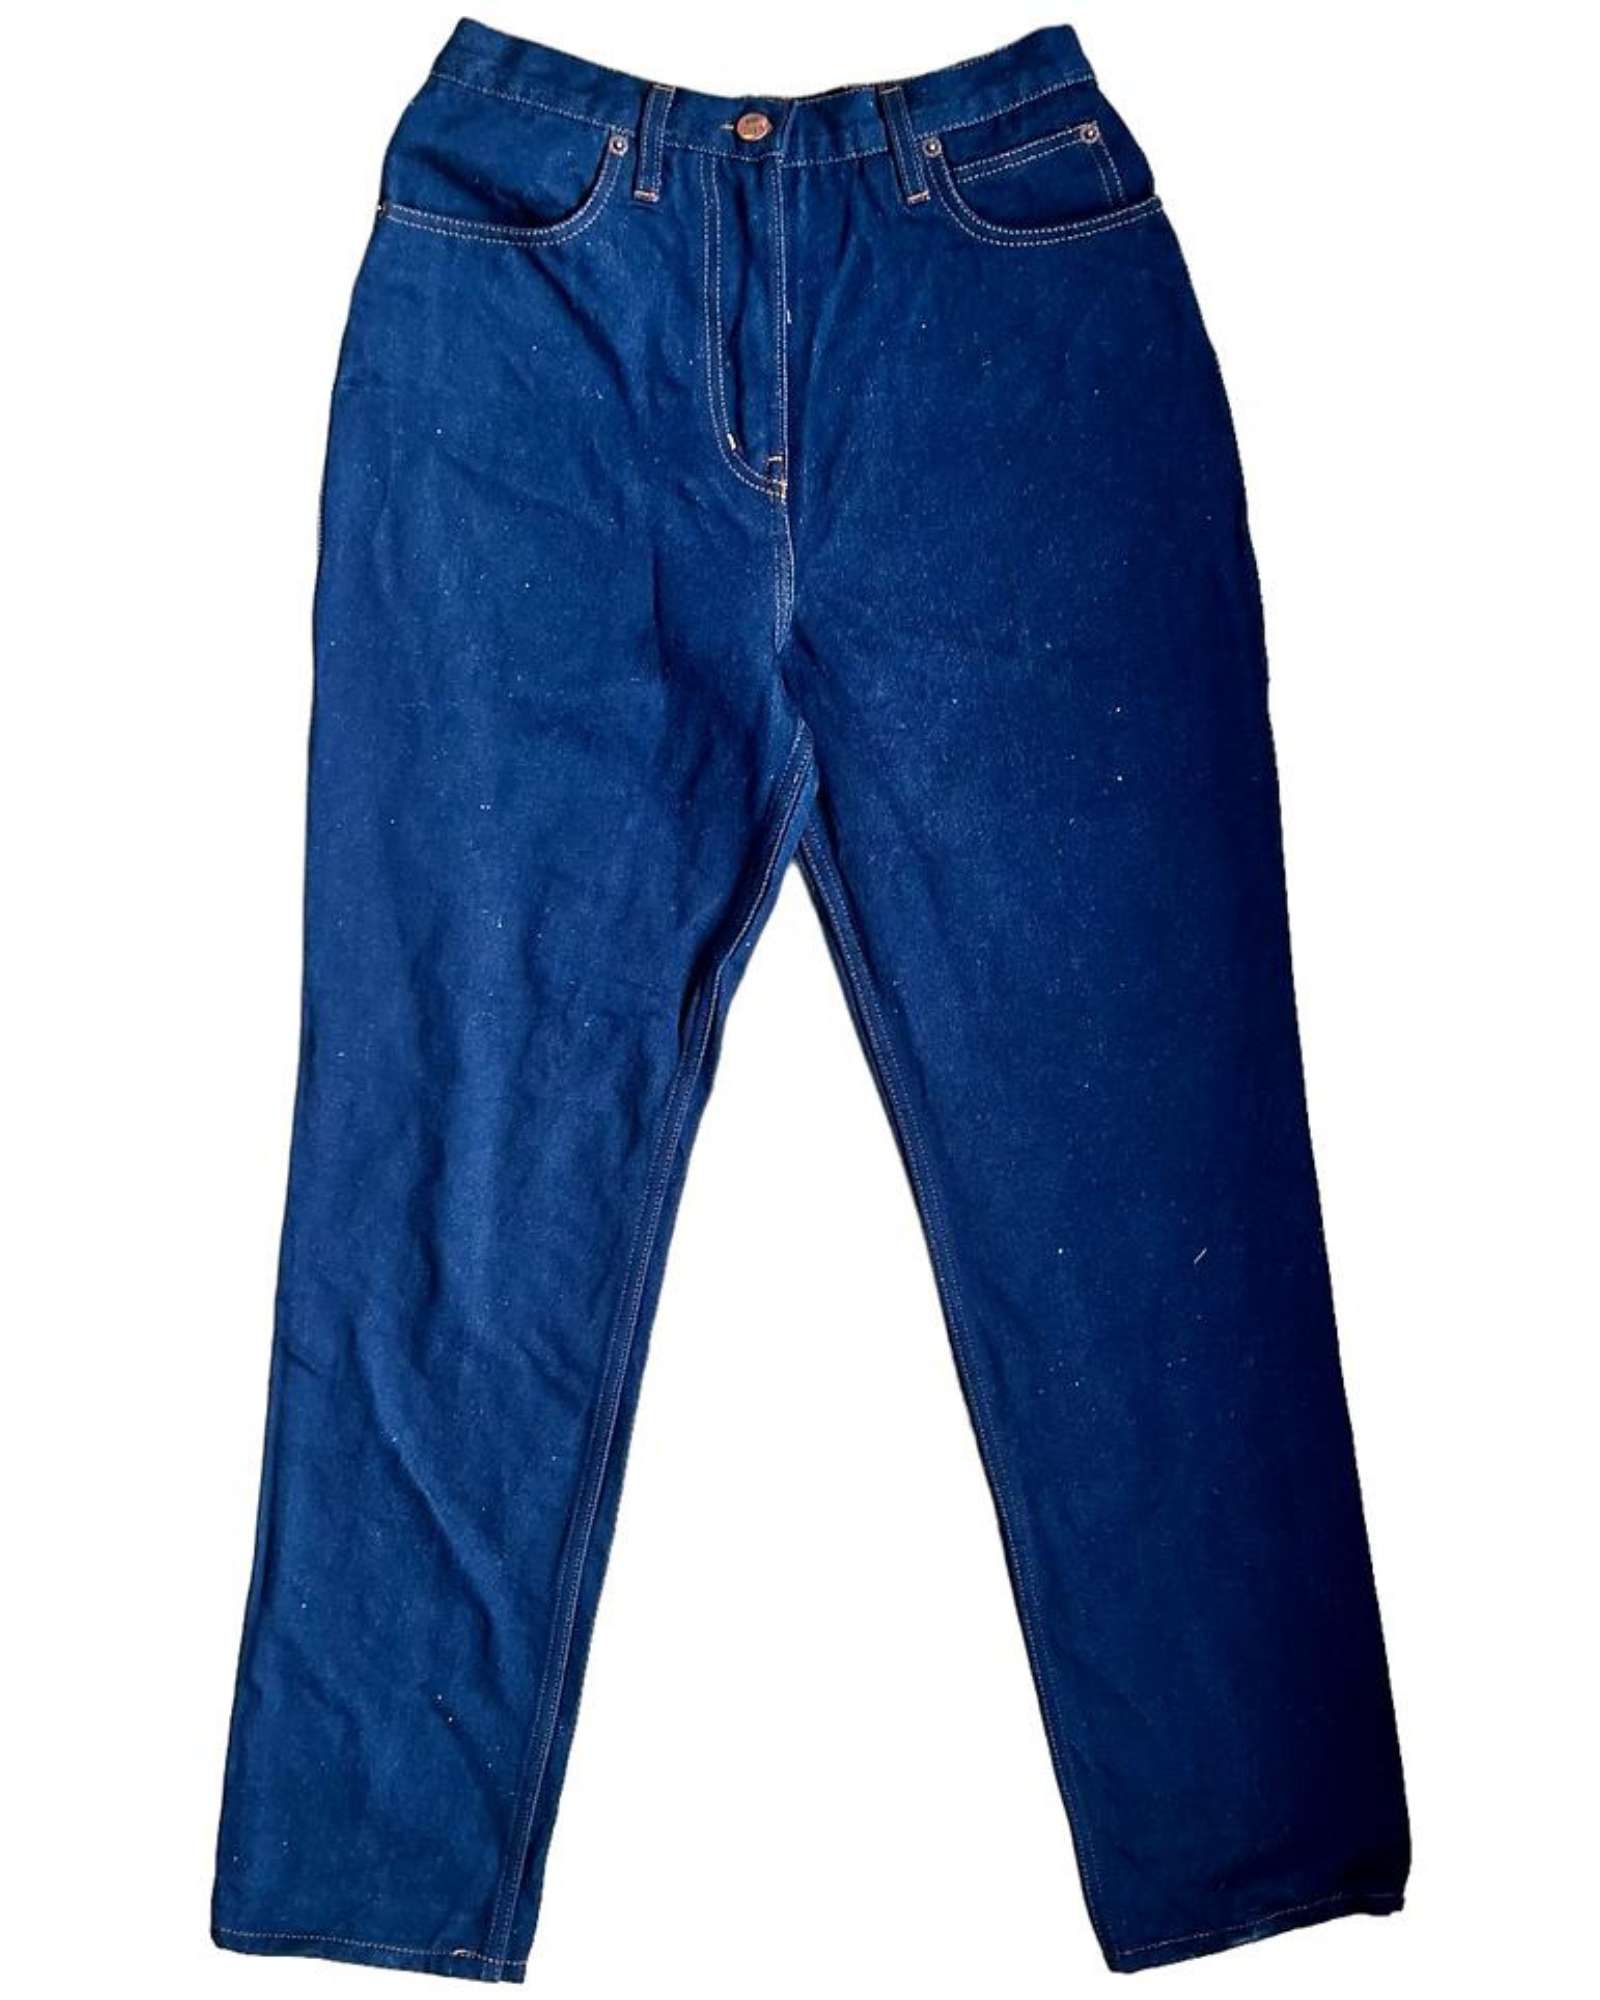 BLEU DES PENTES - Men's Comfort Fit Jeans